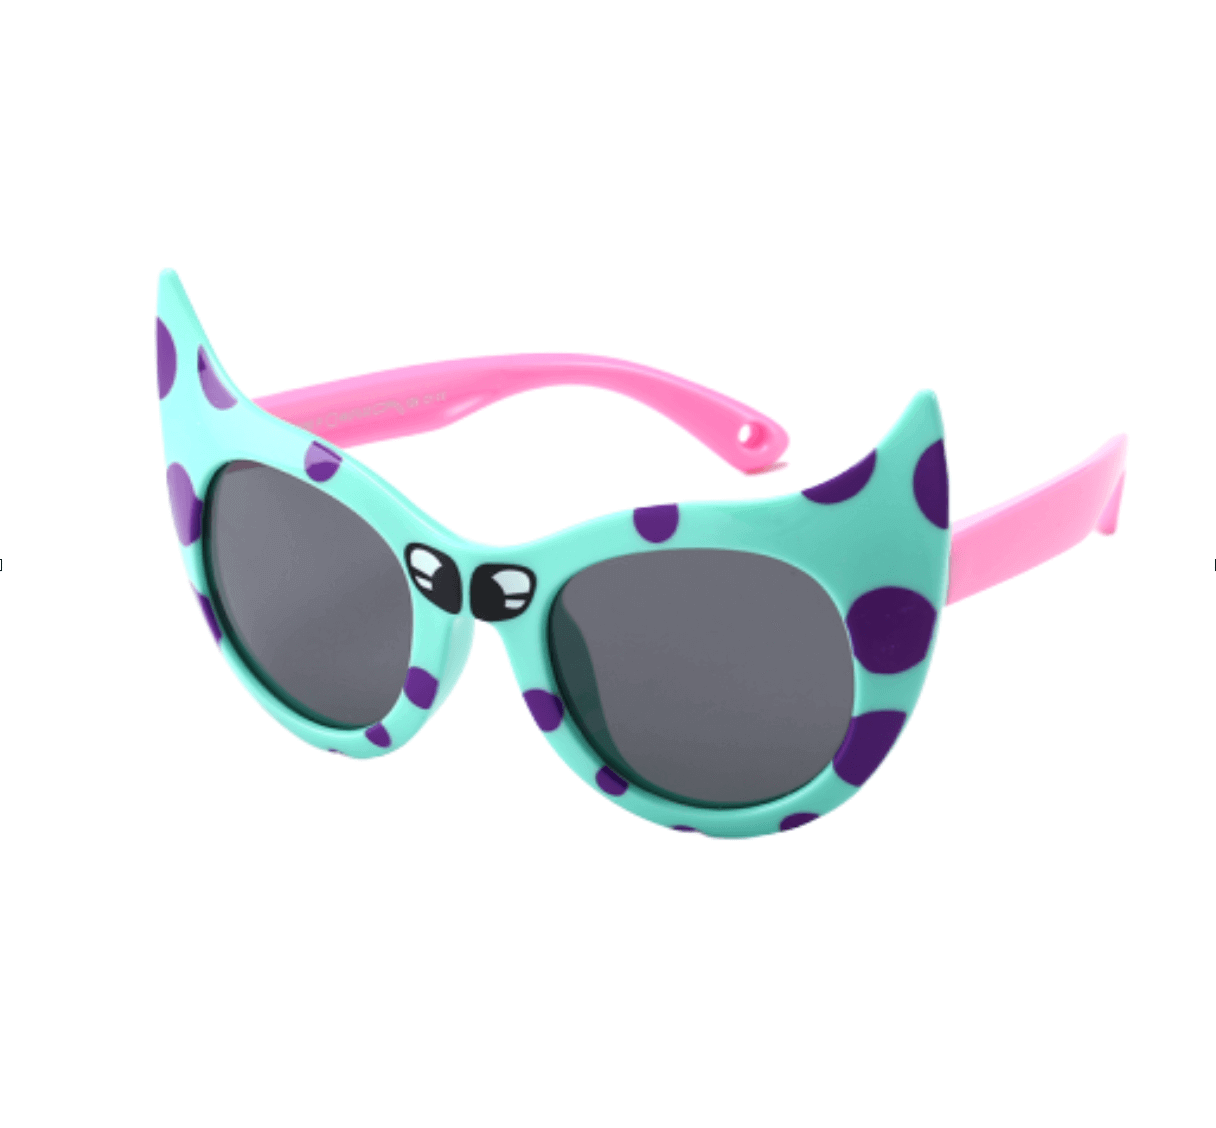 Sunglasses Supplier - China Sunglasses Manufacturer_Kid’s Fashion Sunglasses